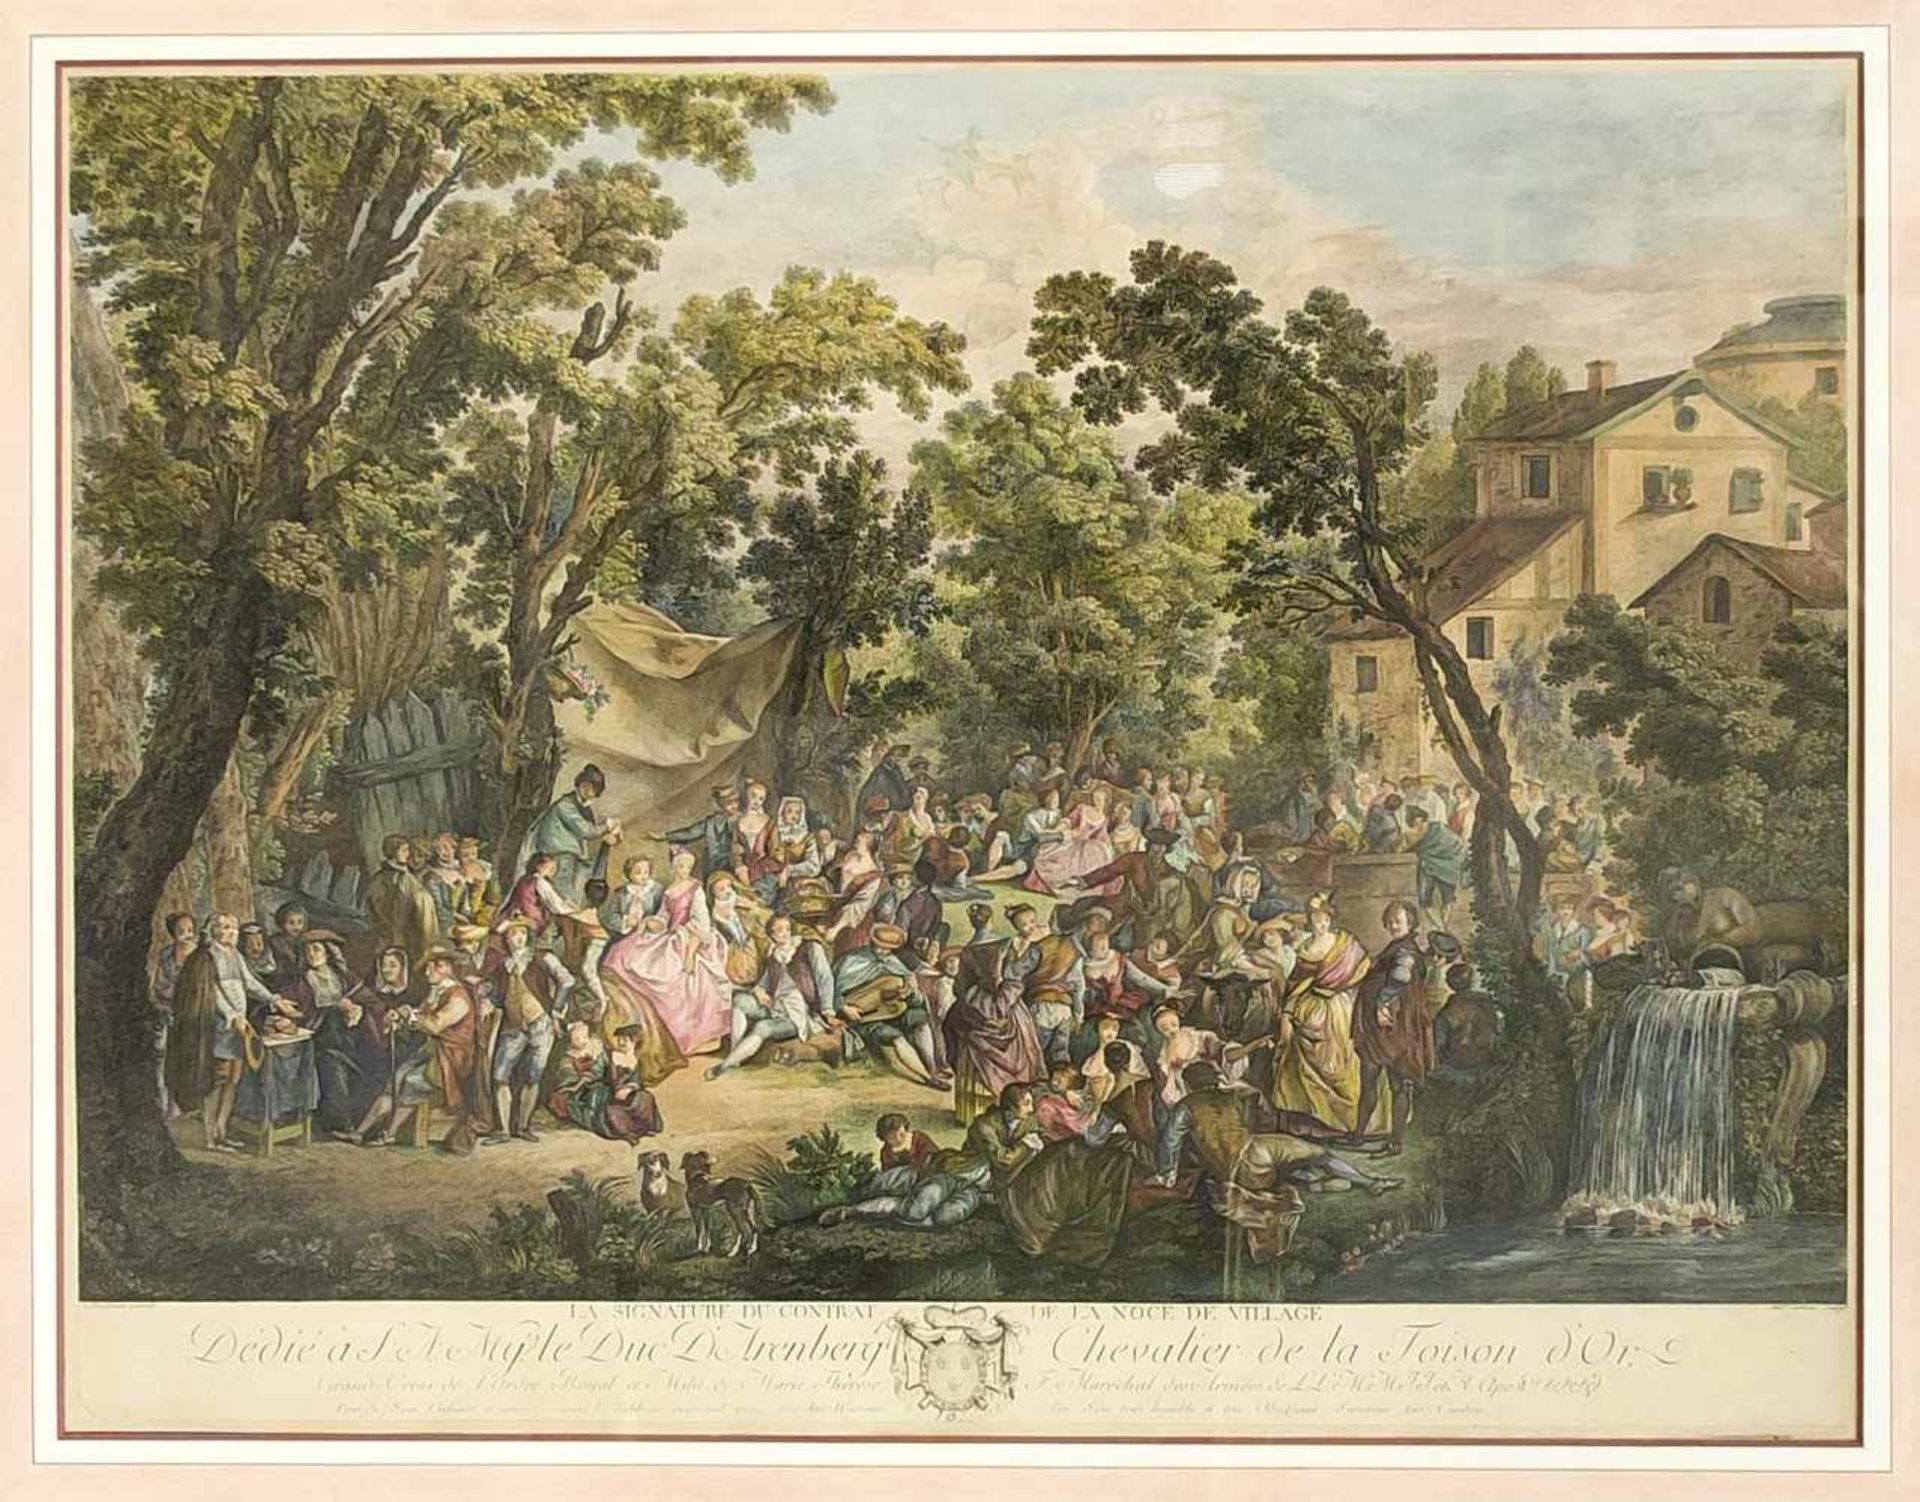 Antoine Alexandre J. Cardon (1739-1822) nach Jean-Antoine Watteau (1684-1721), "lasignature du